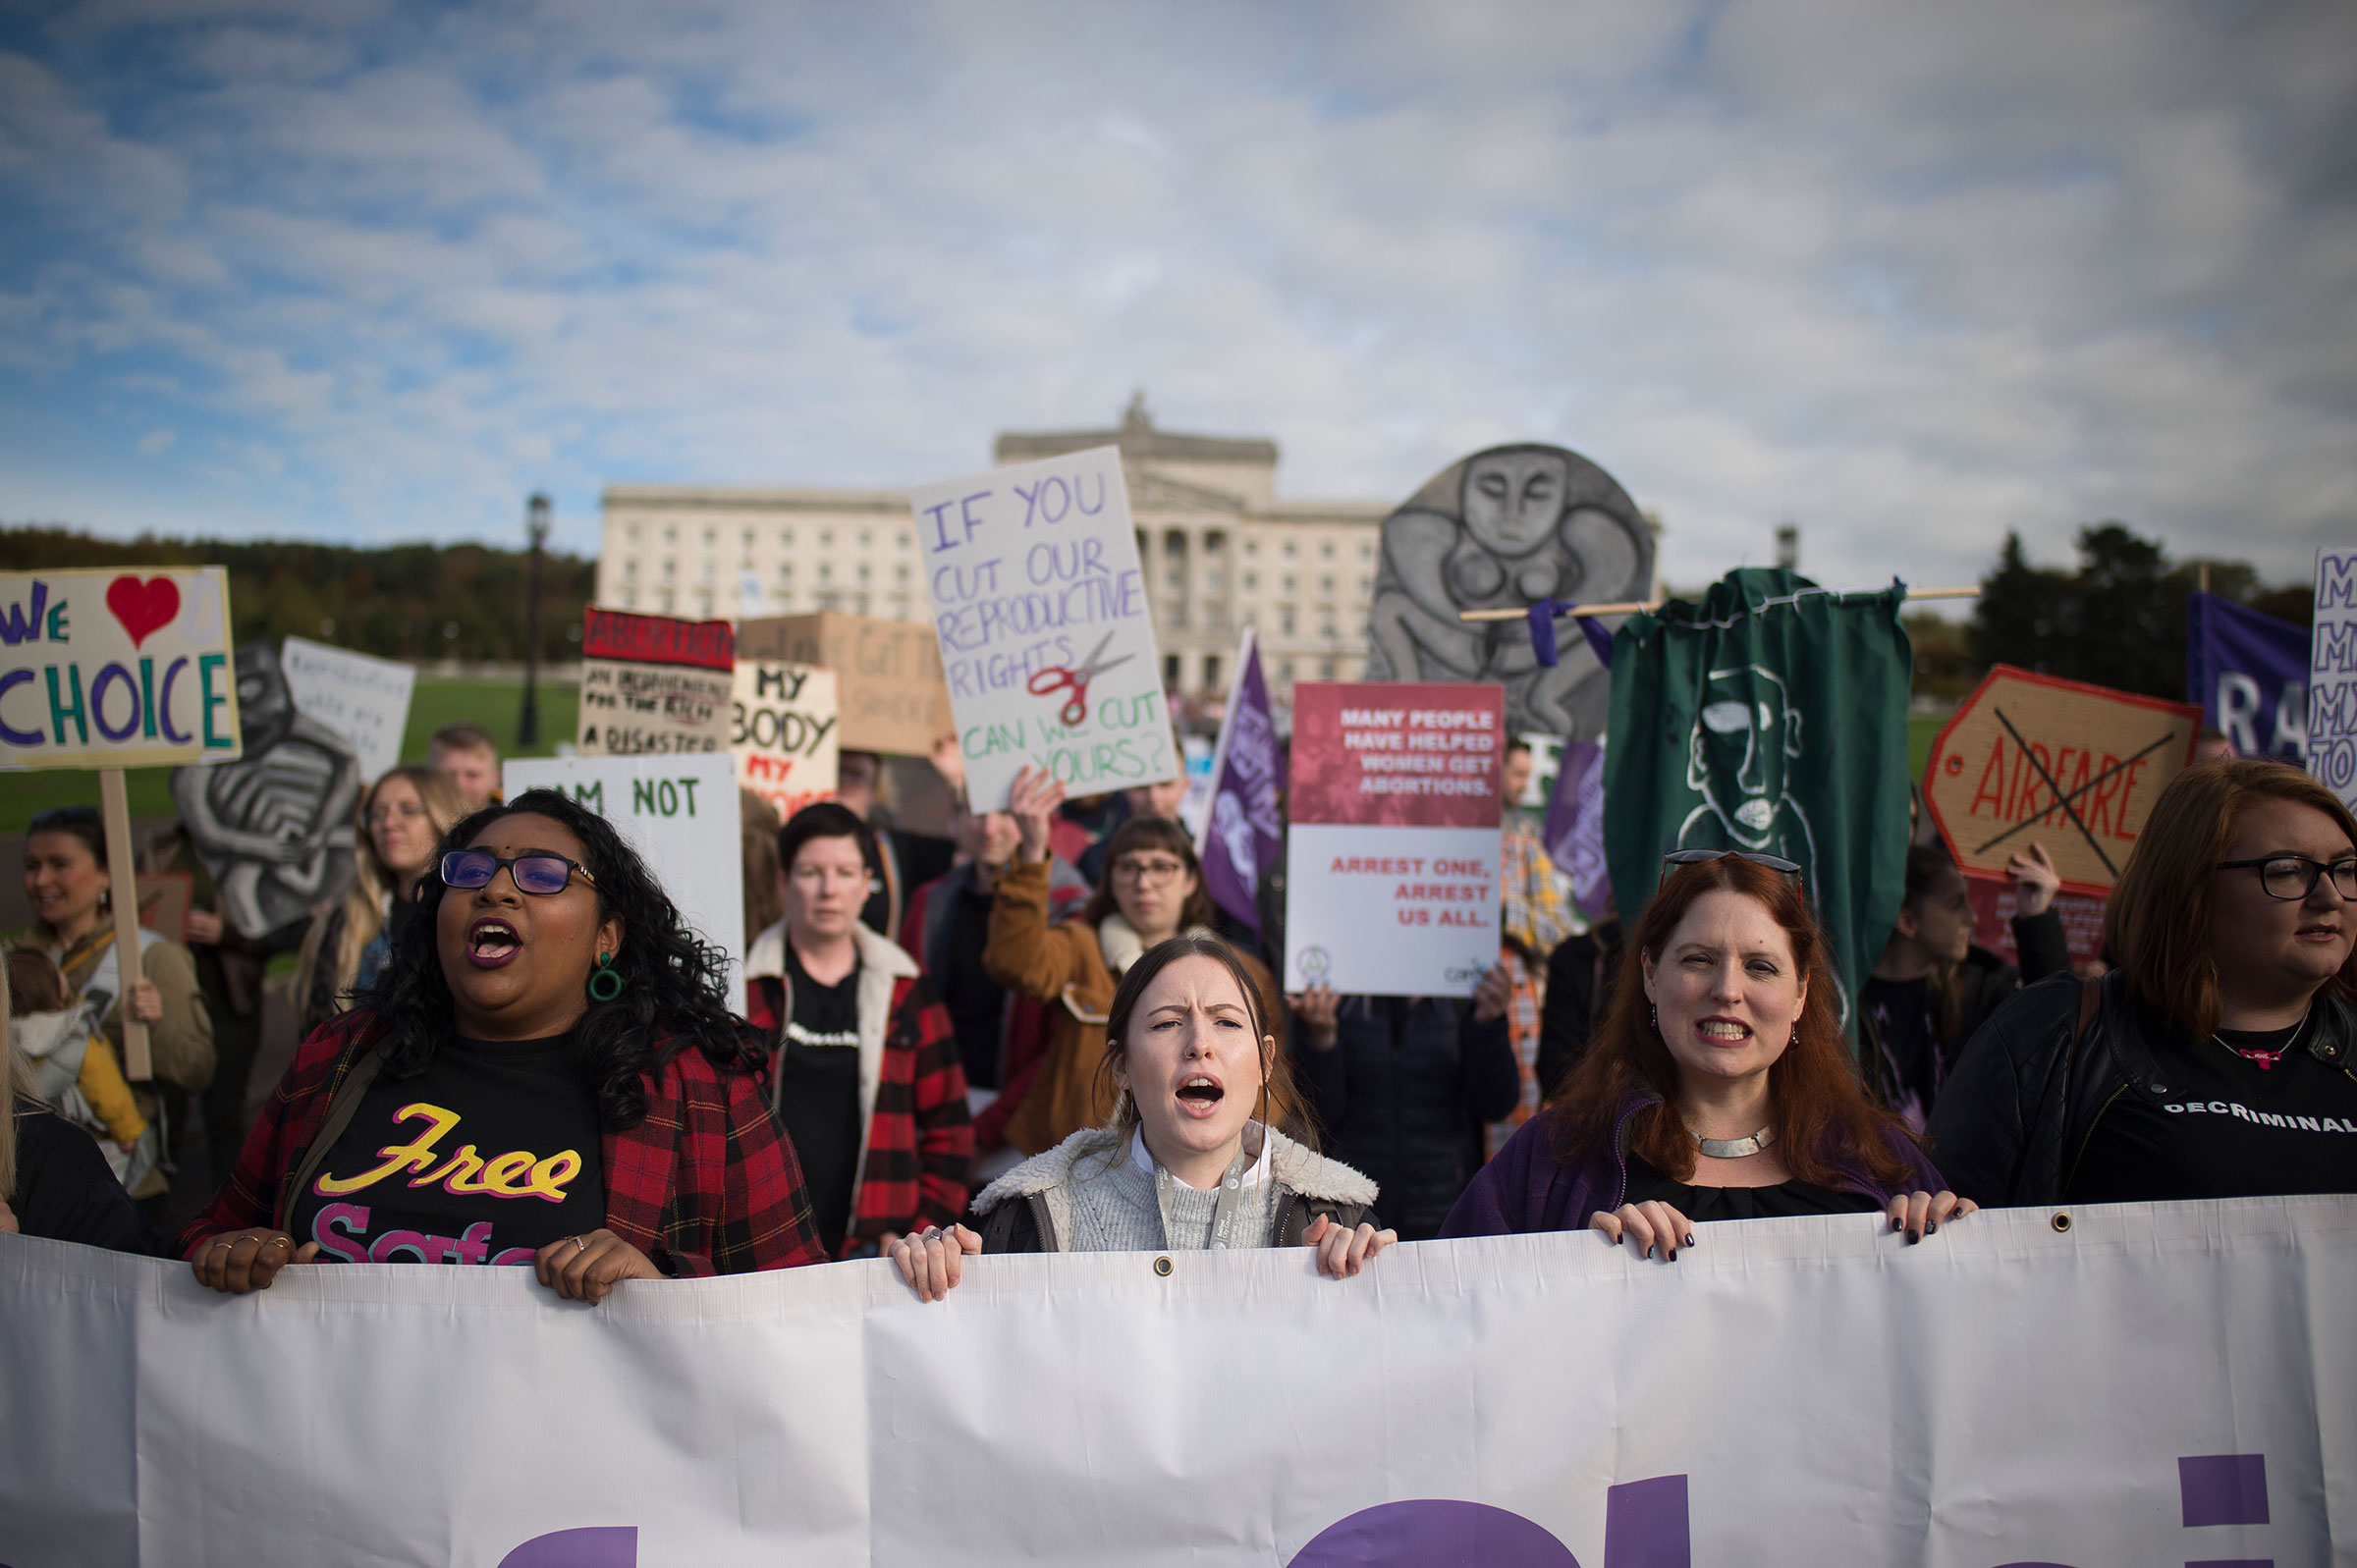 Northern Ireland Women Still Struggle to Access Abortion Time